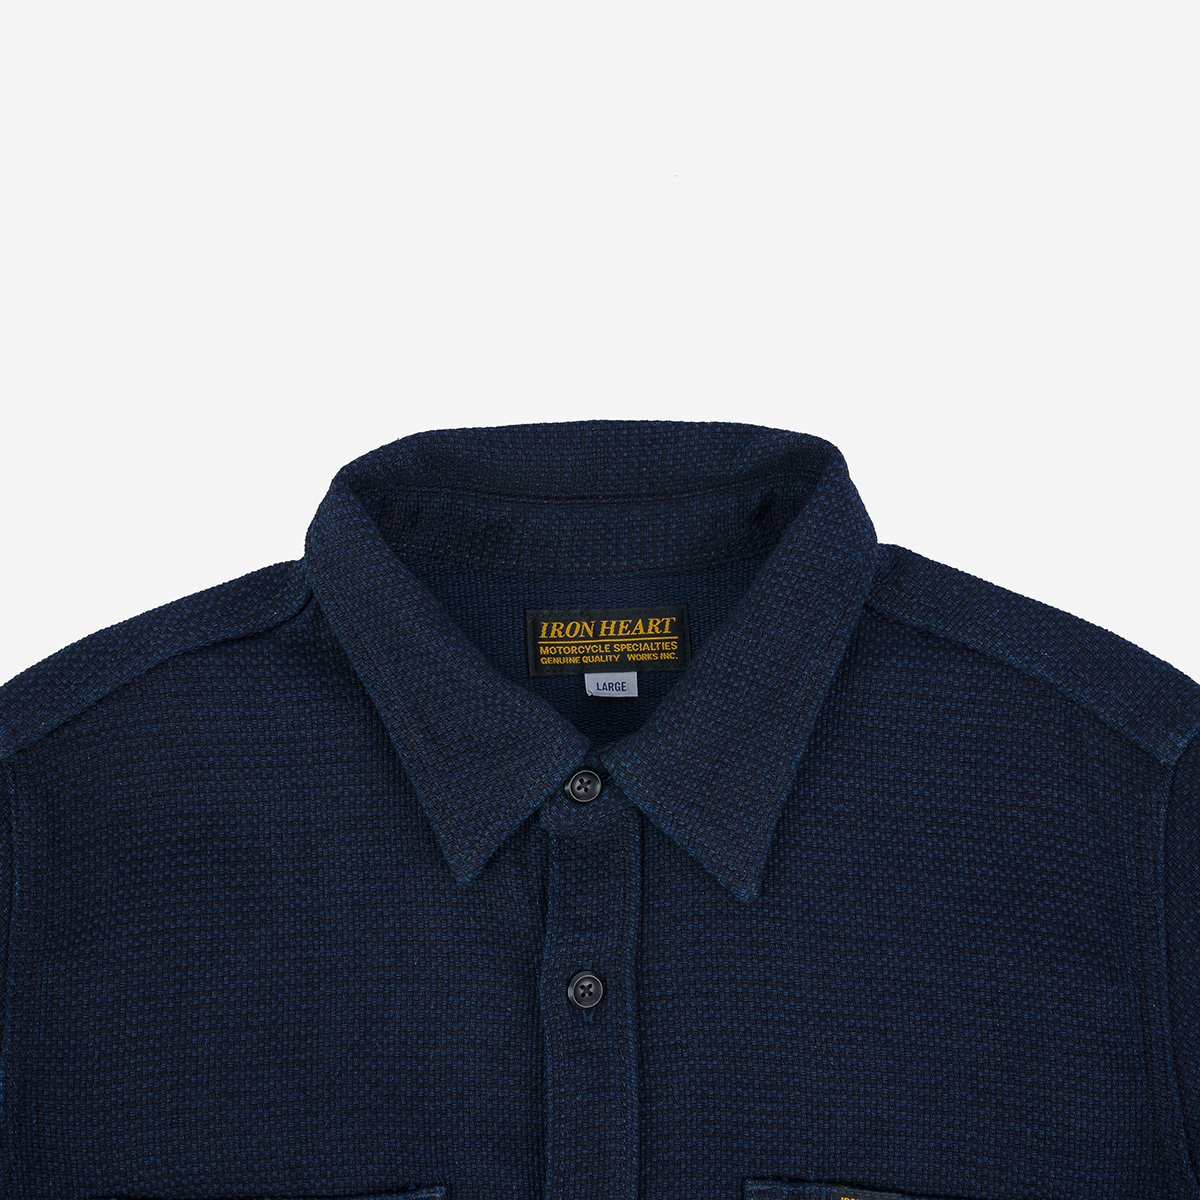 Iron Heart IHSH-380-IND 12oz Dobby Cloth Work Shirt - Indigo